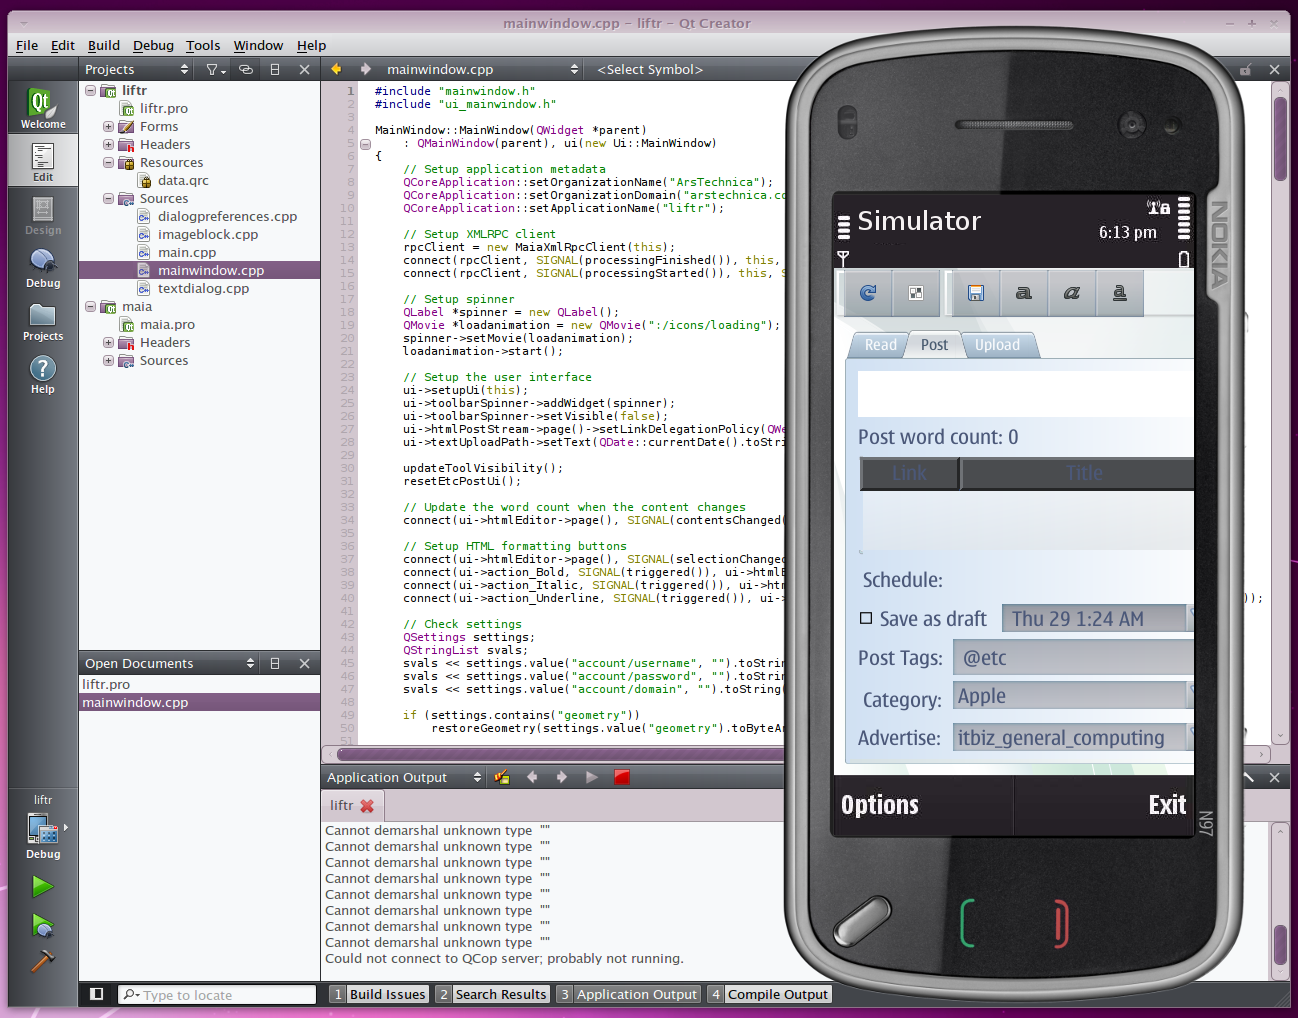 Nokia Qt SDK beta has adorable mobile simulators